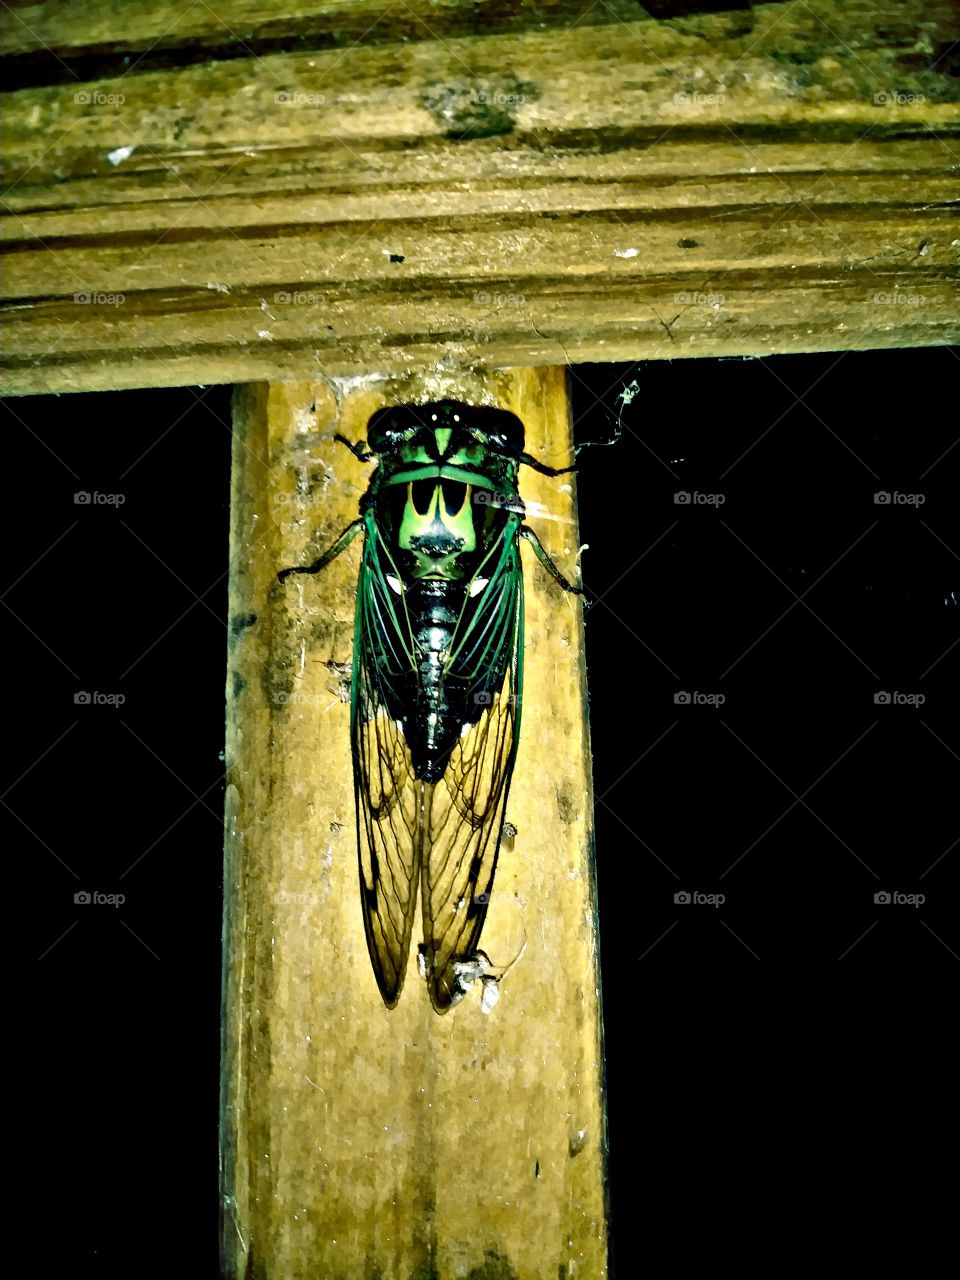 cicada green and black